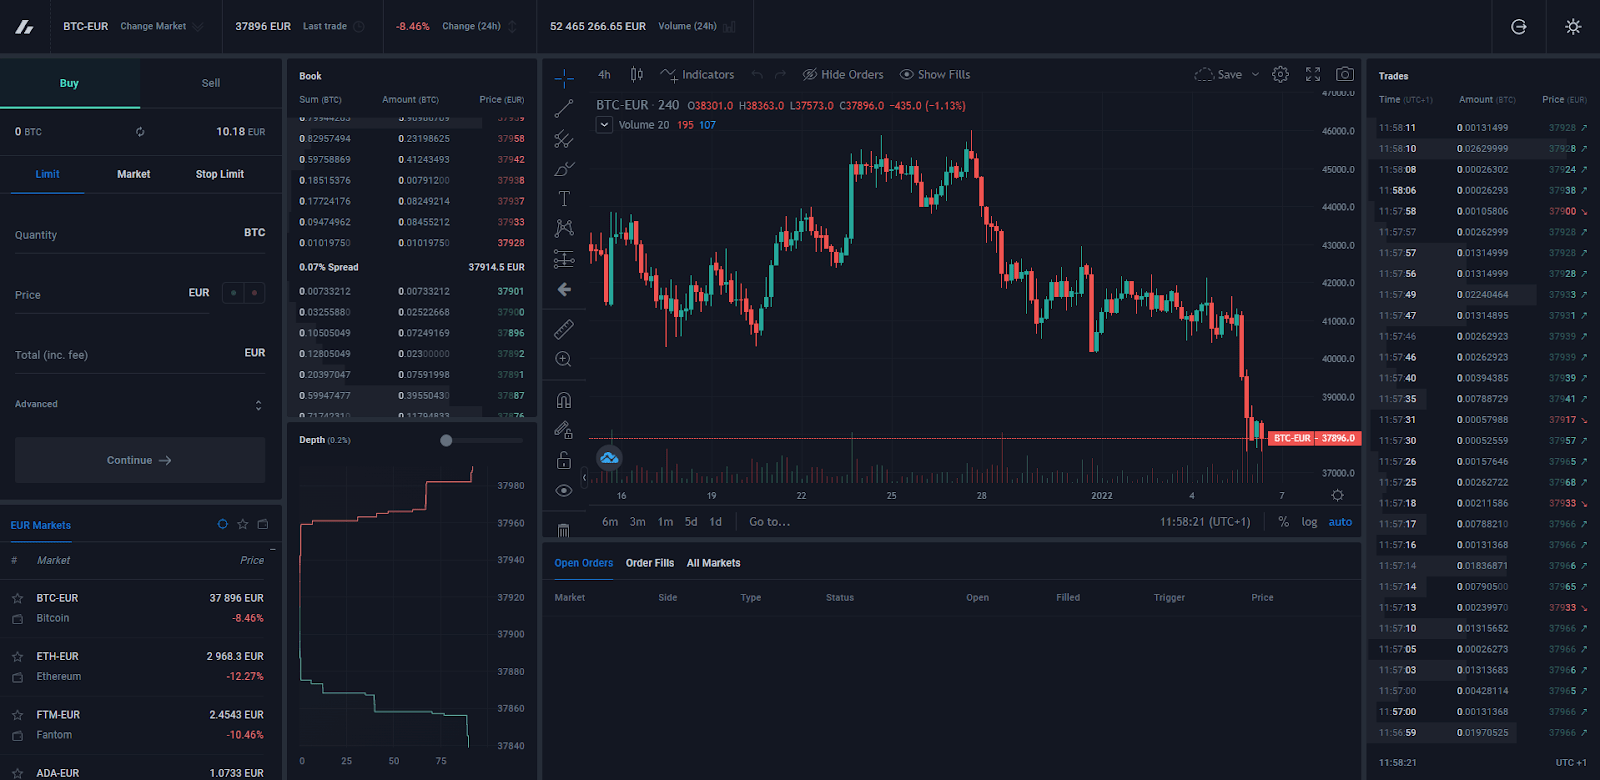 Bitvavo advanced trading interface